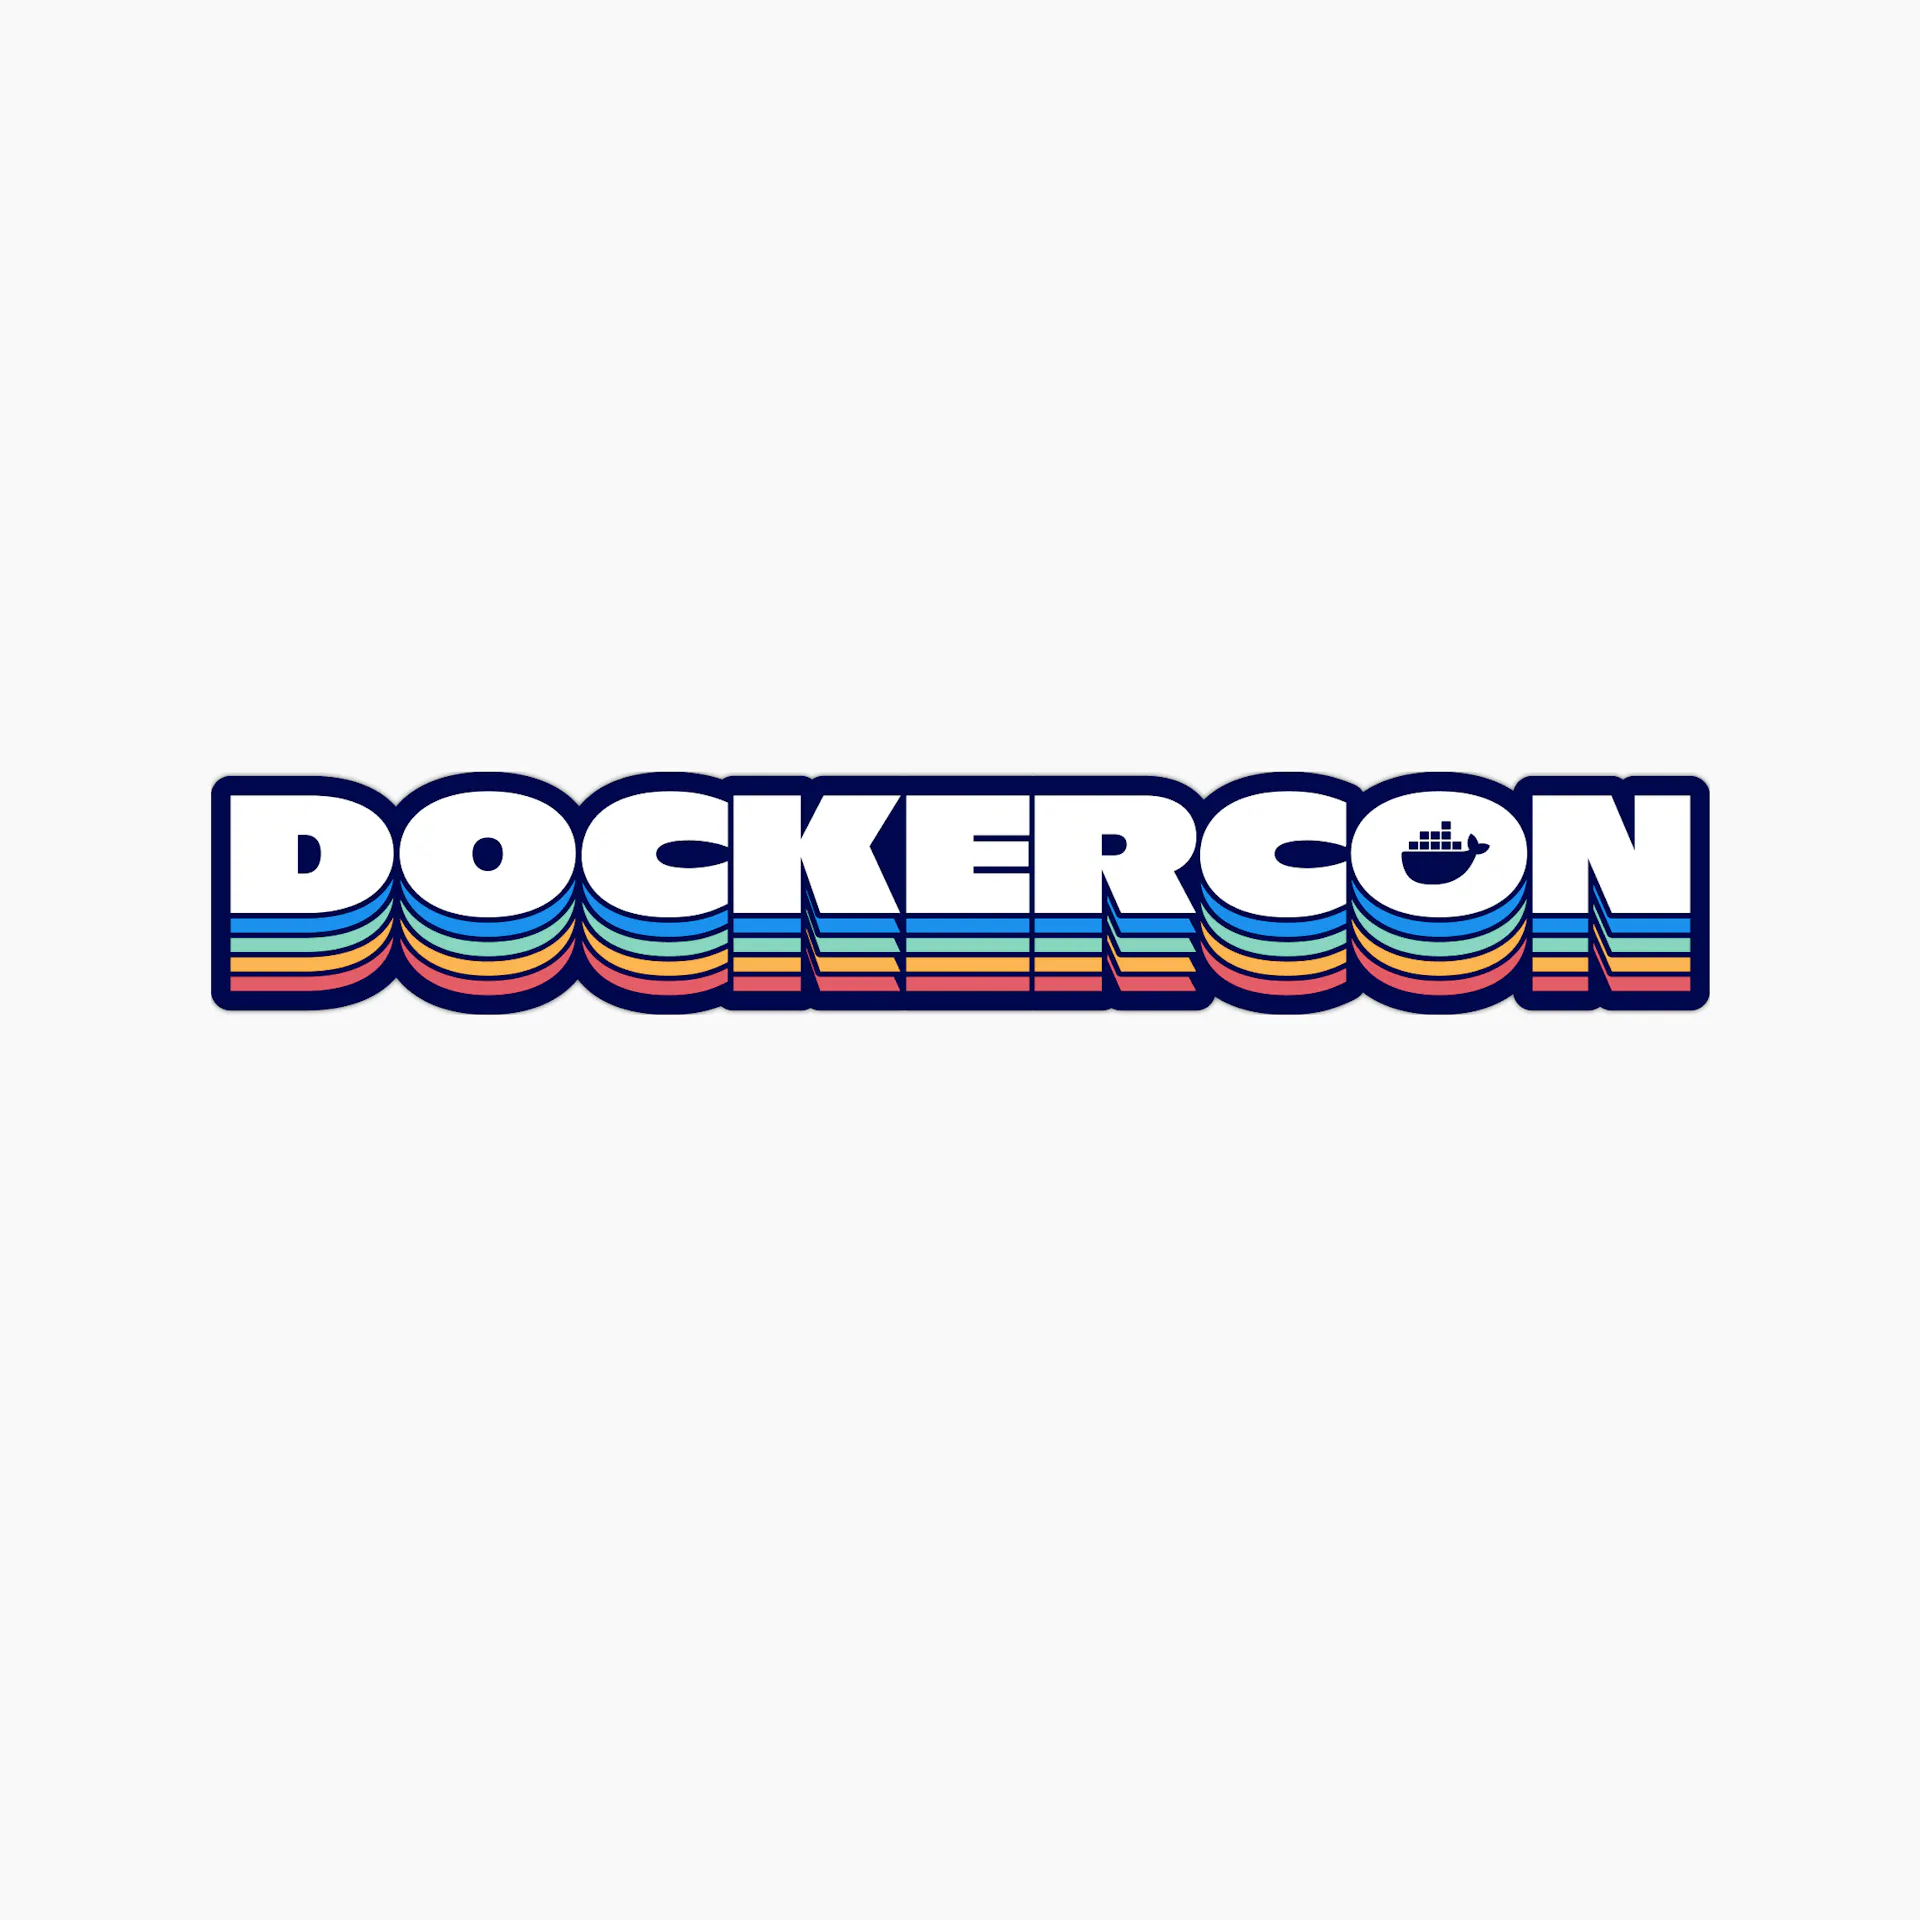 DockerCon Rainbow Stack Sticker